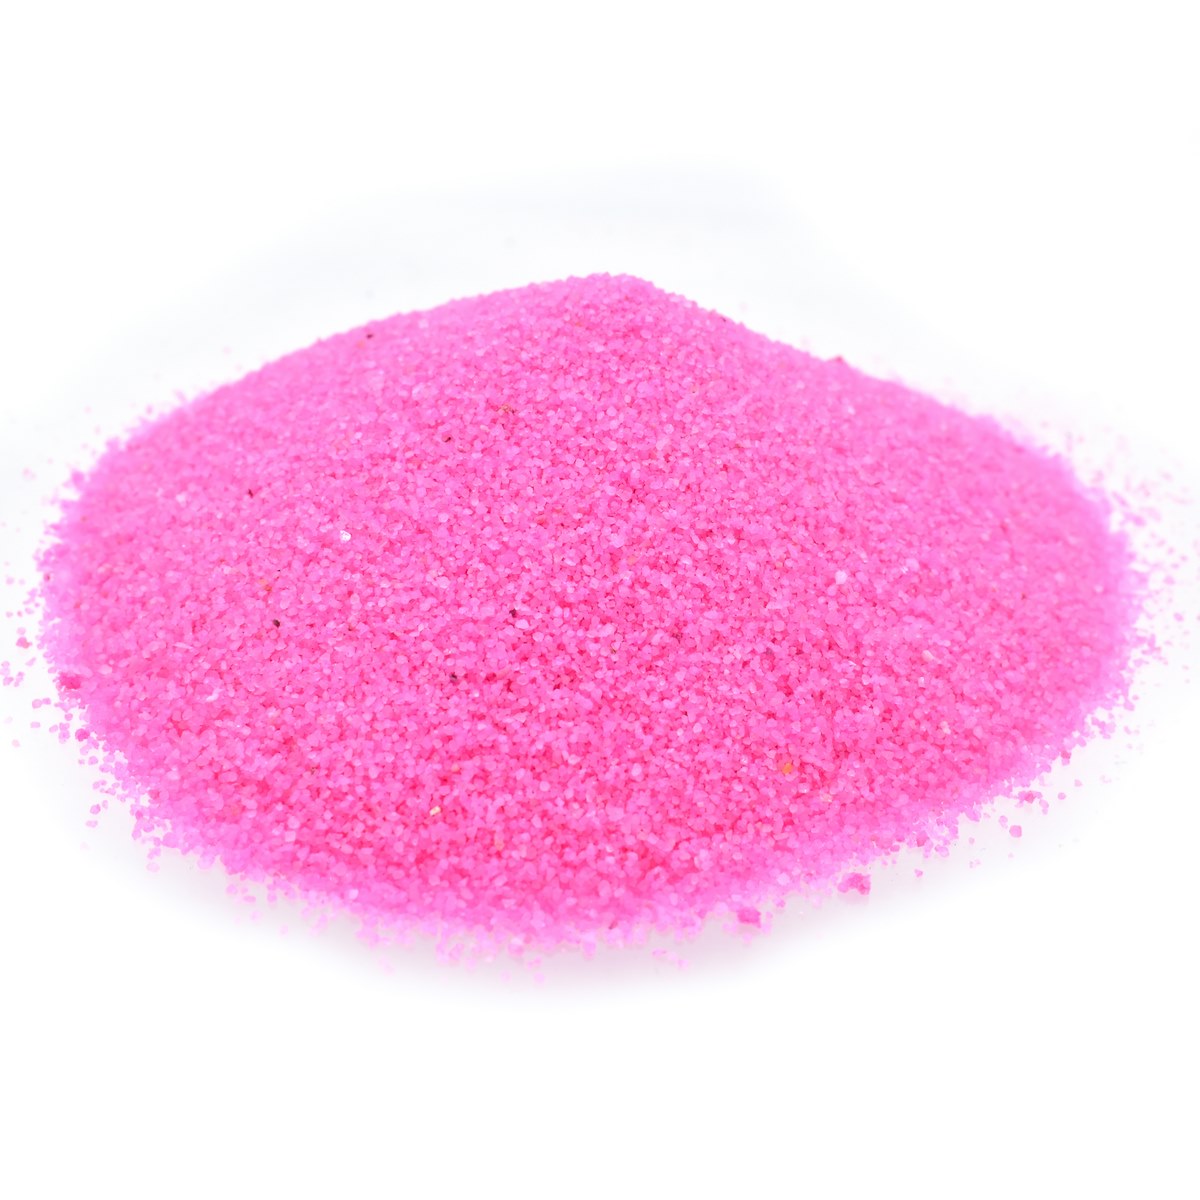 jags-mumbai Sand Shop Jags Coloured Sand 160Gms Baby Pink No 18 Online | JCSBPK18